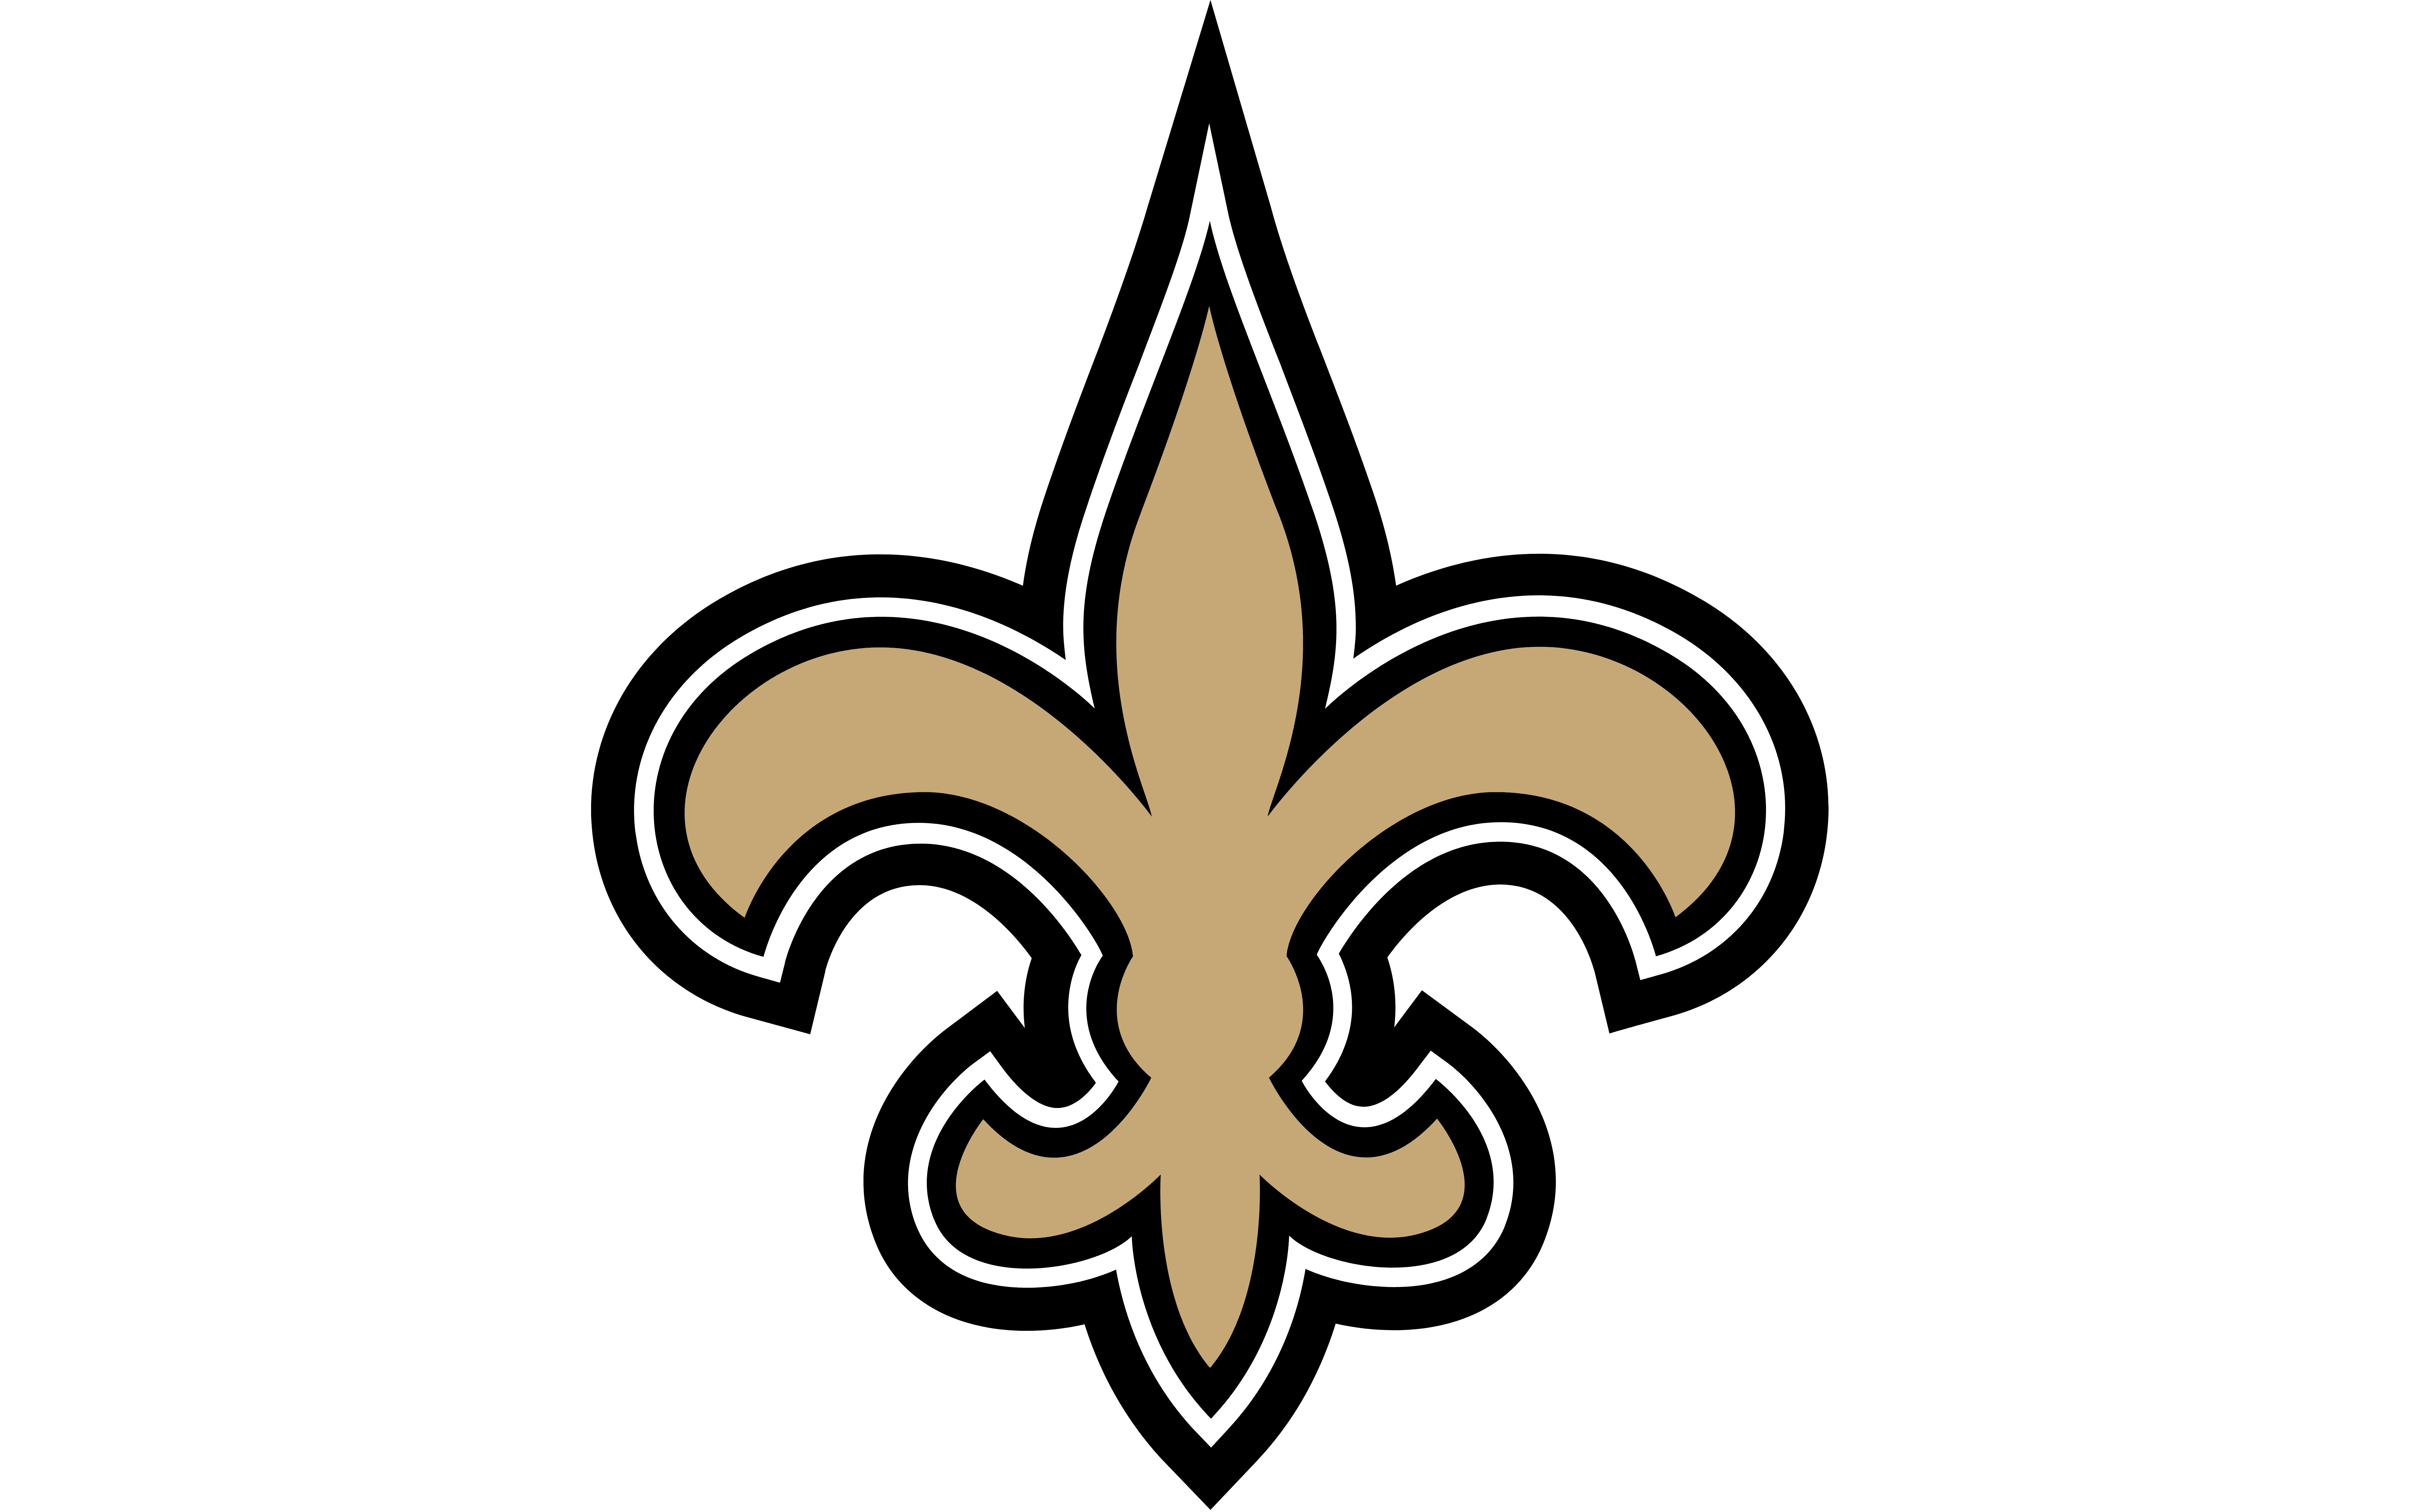 New Orleans Saints Football NFL News - NOLAcom